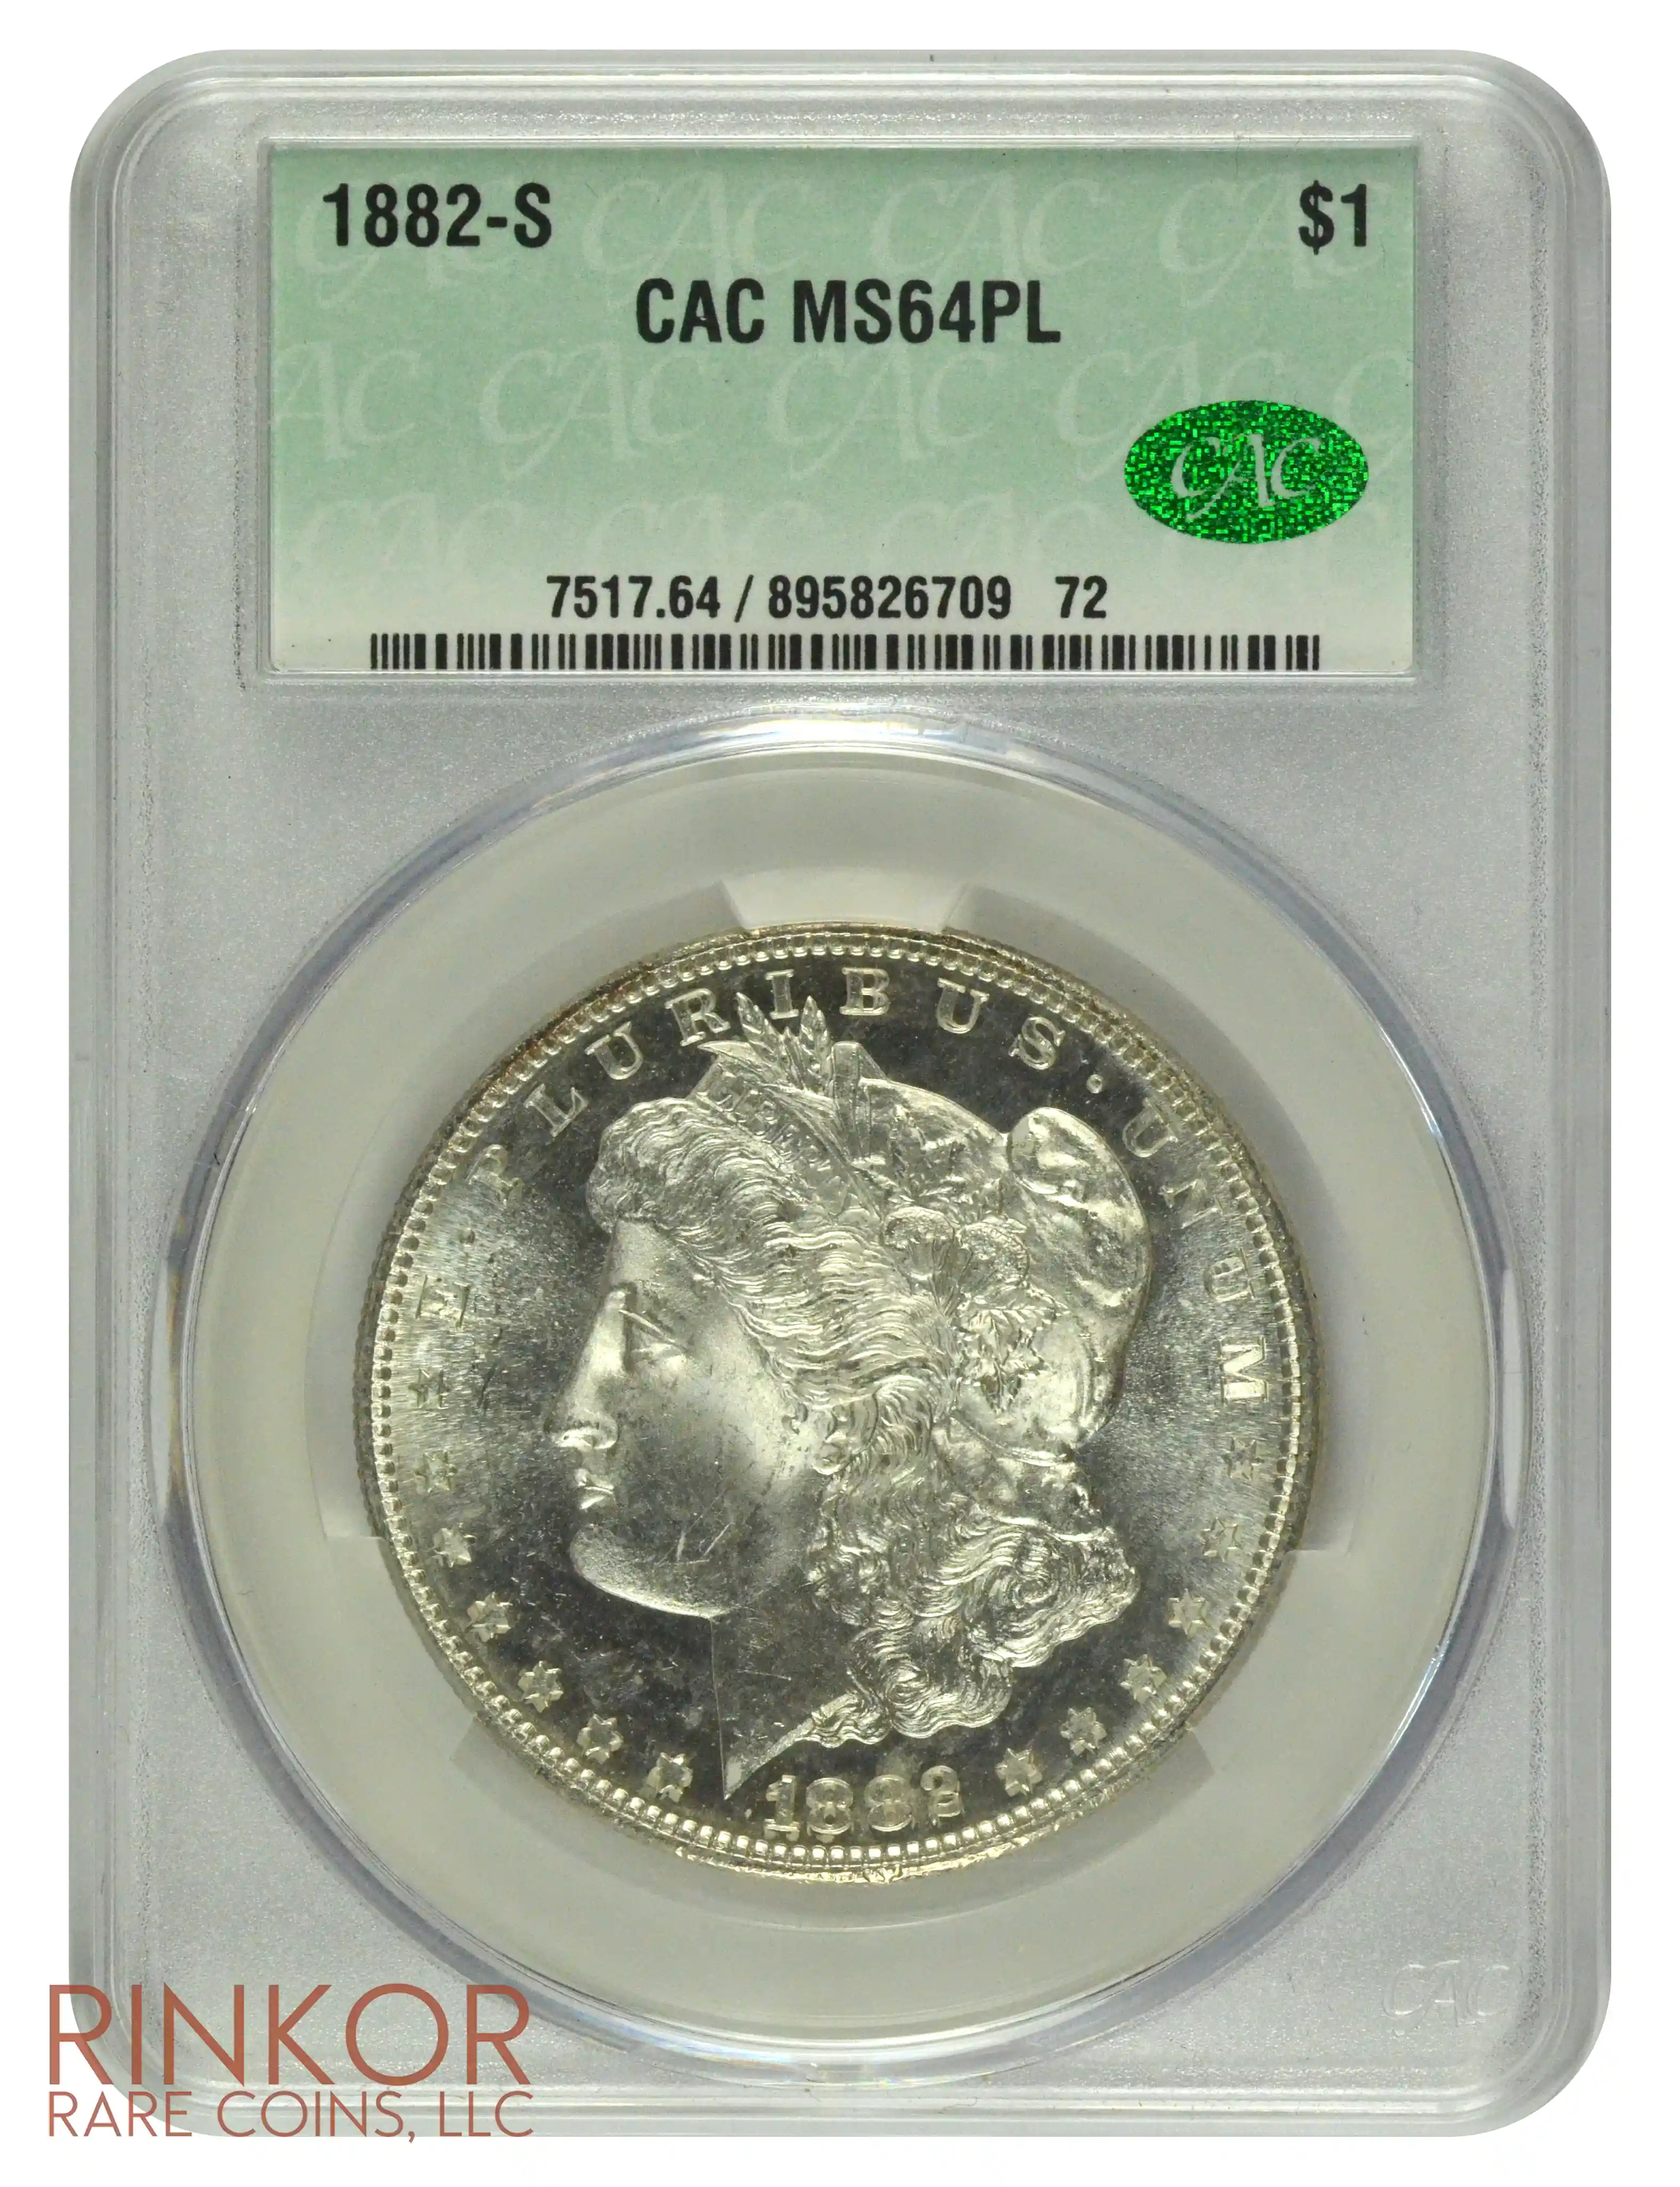 1882-S $1 CACG MS 64 PL